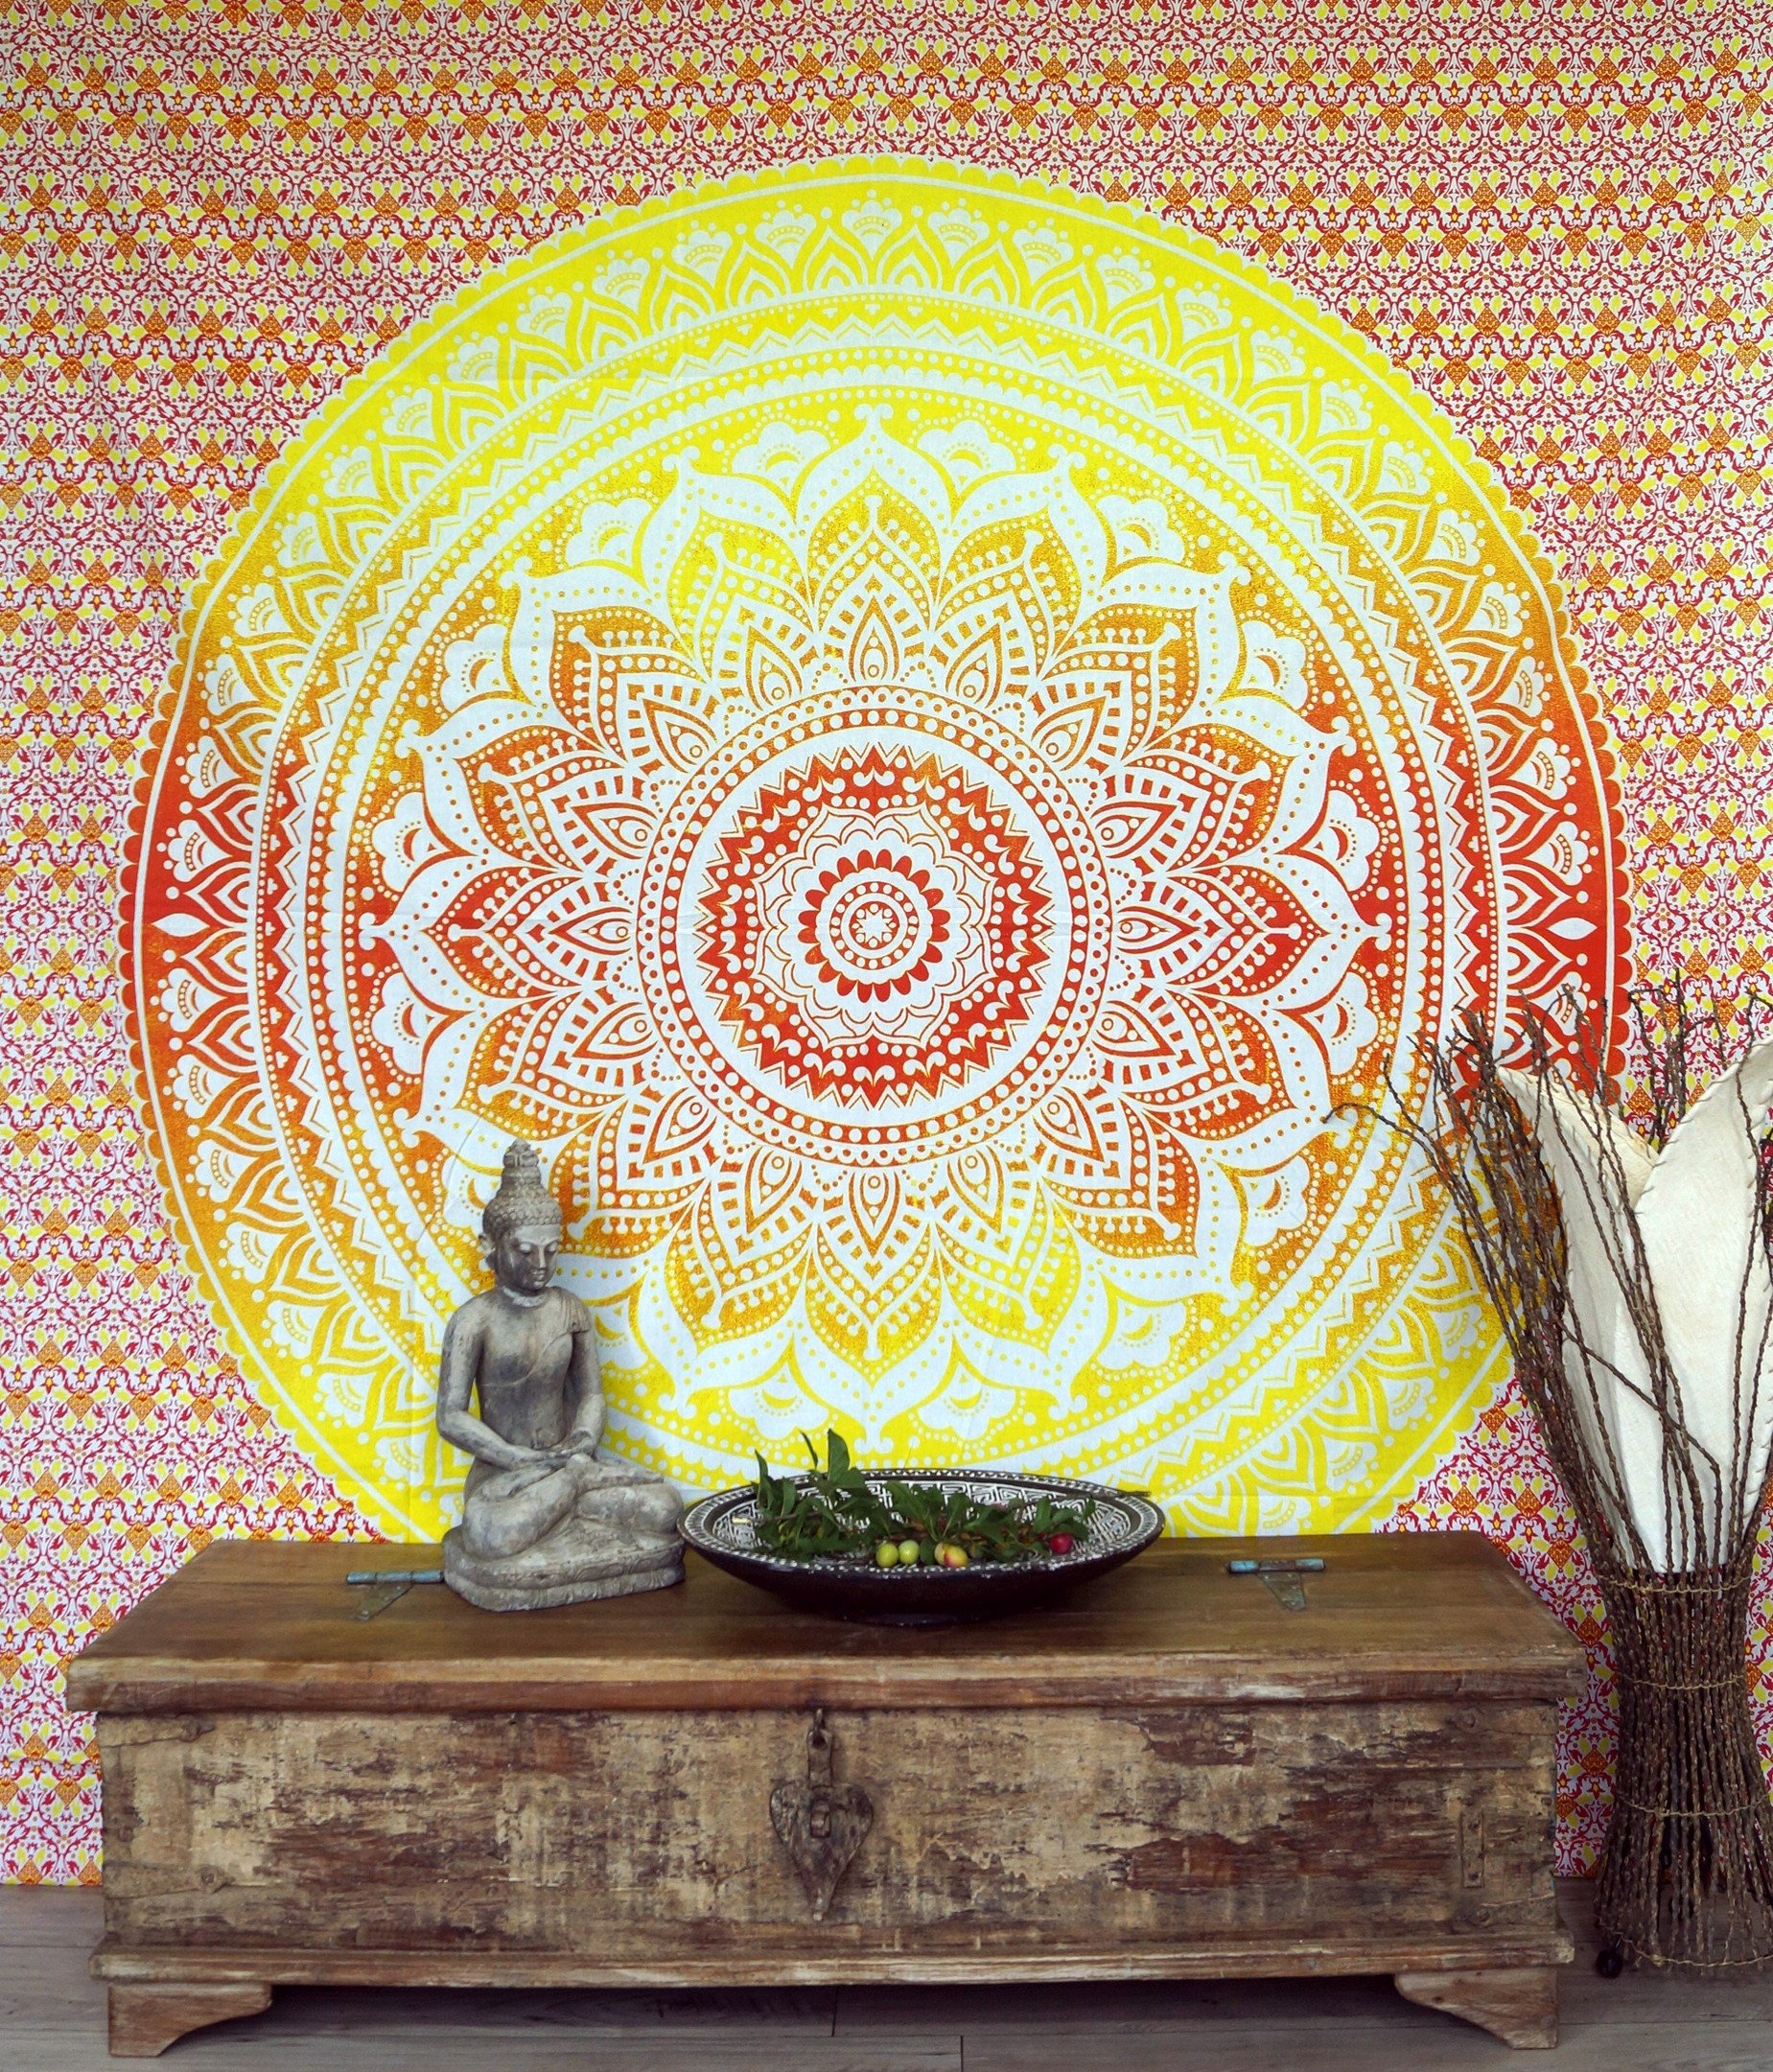 GURU SHOP Boho-Style Wandbehang, Indische Tagesdecke Mandala Druck - Orange/gelb, Baumwolle, 230x210x0,2 cm, Bettüberwurf, Sofa Überwurf